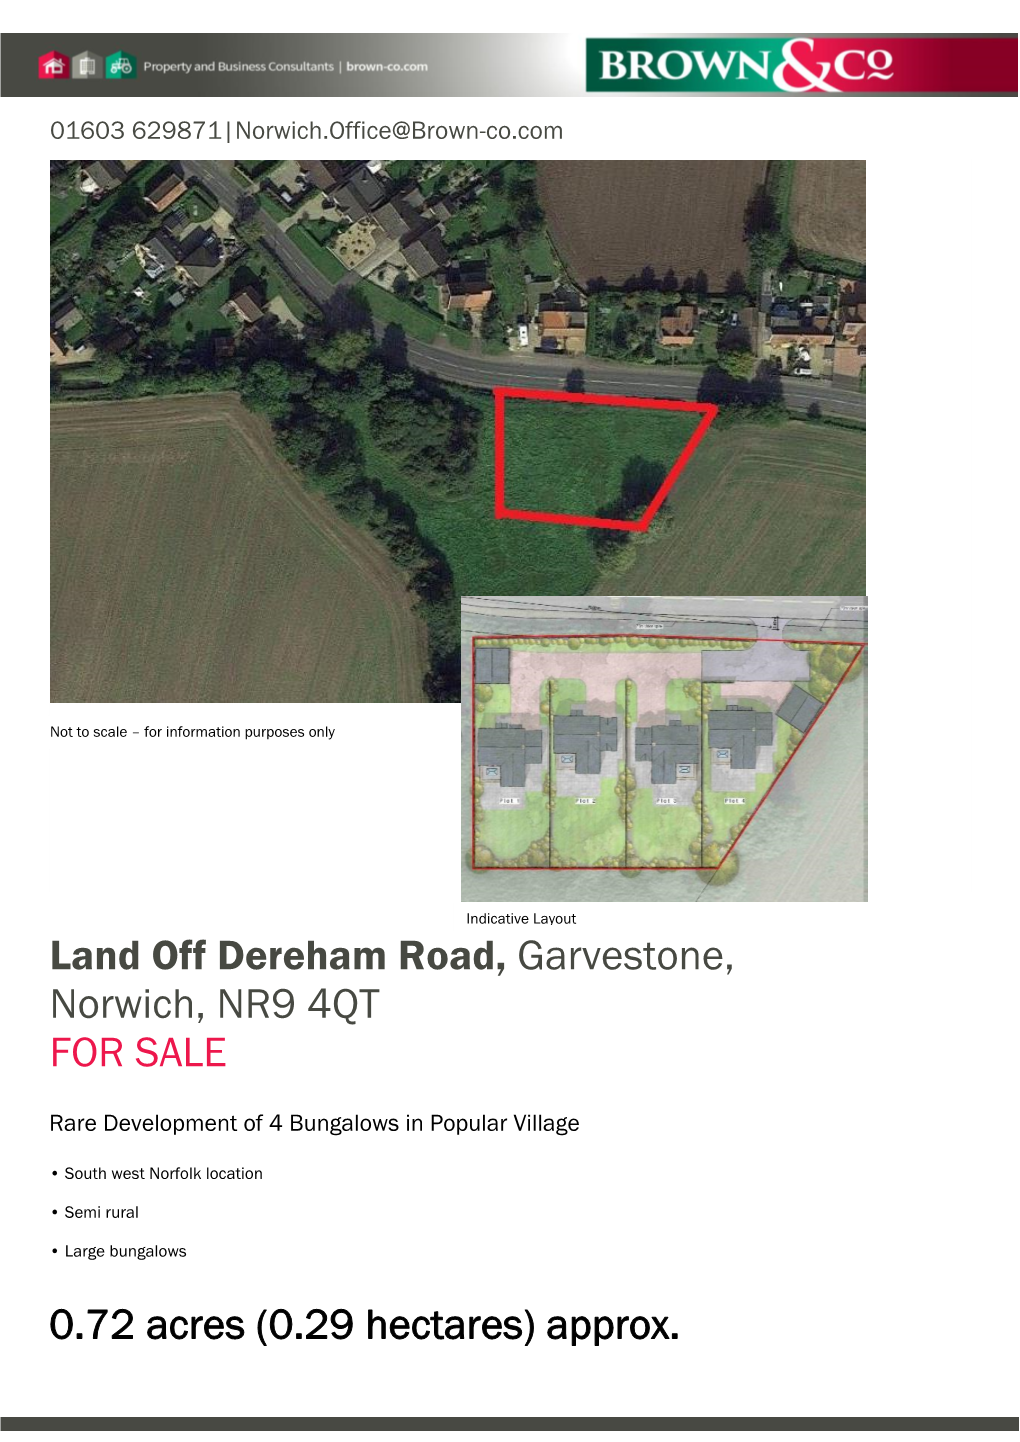 Land Off Dereham Road, Garvestone, Norwich, NR9 4QT for SALE